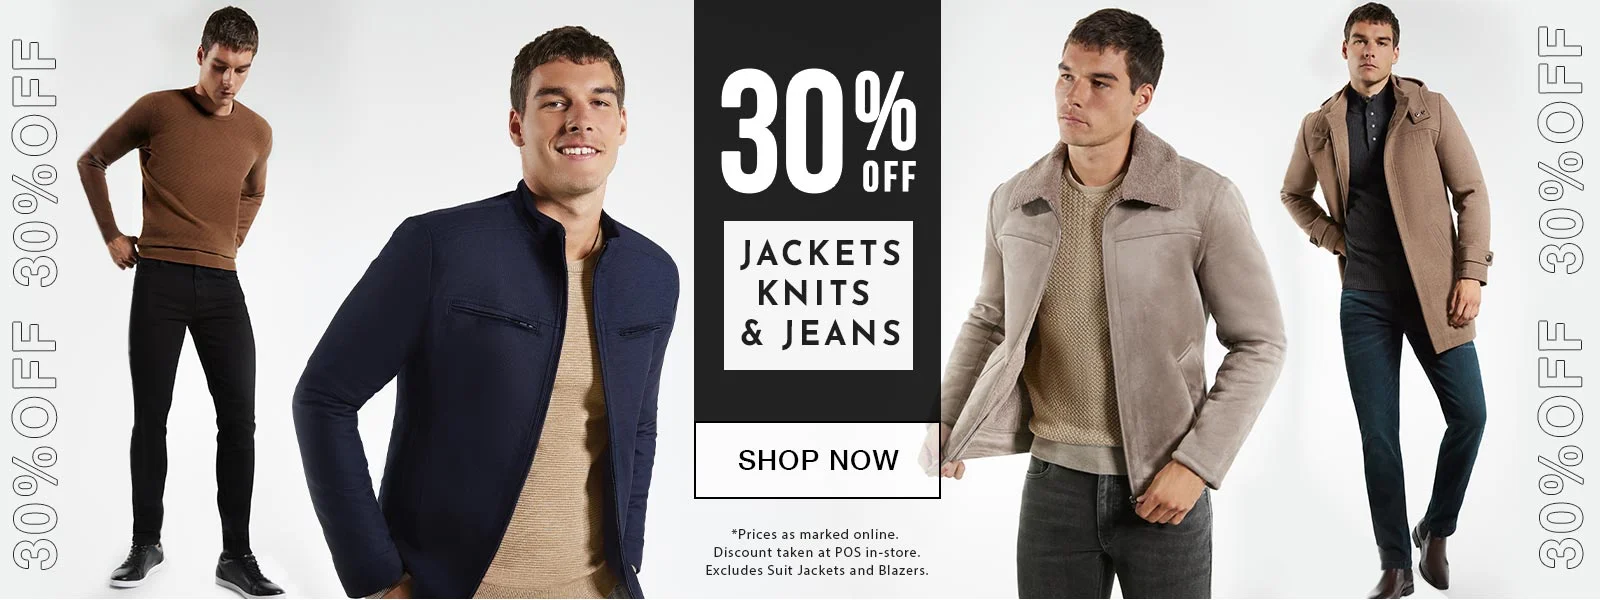 Tarocash 30% OFF on jackets, knits & jeans